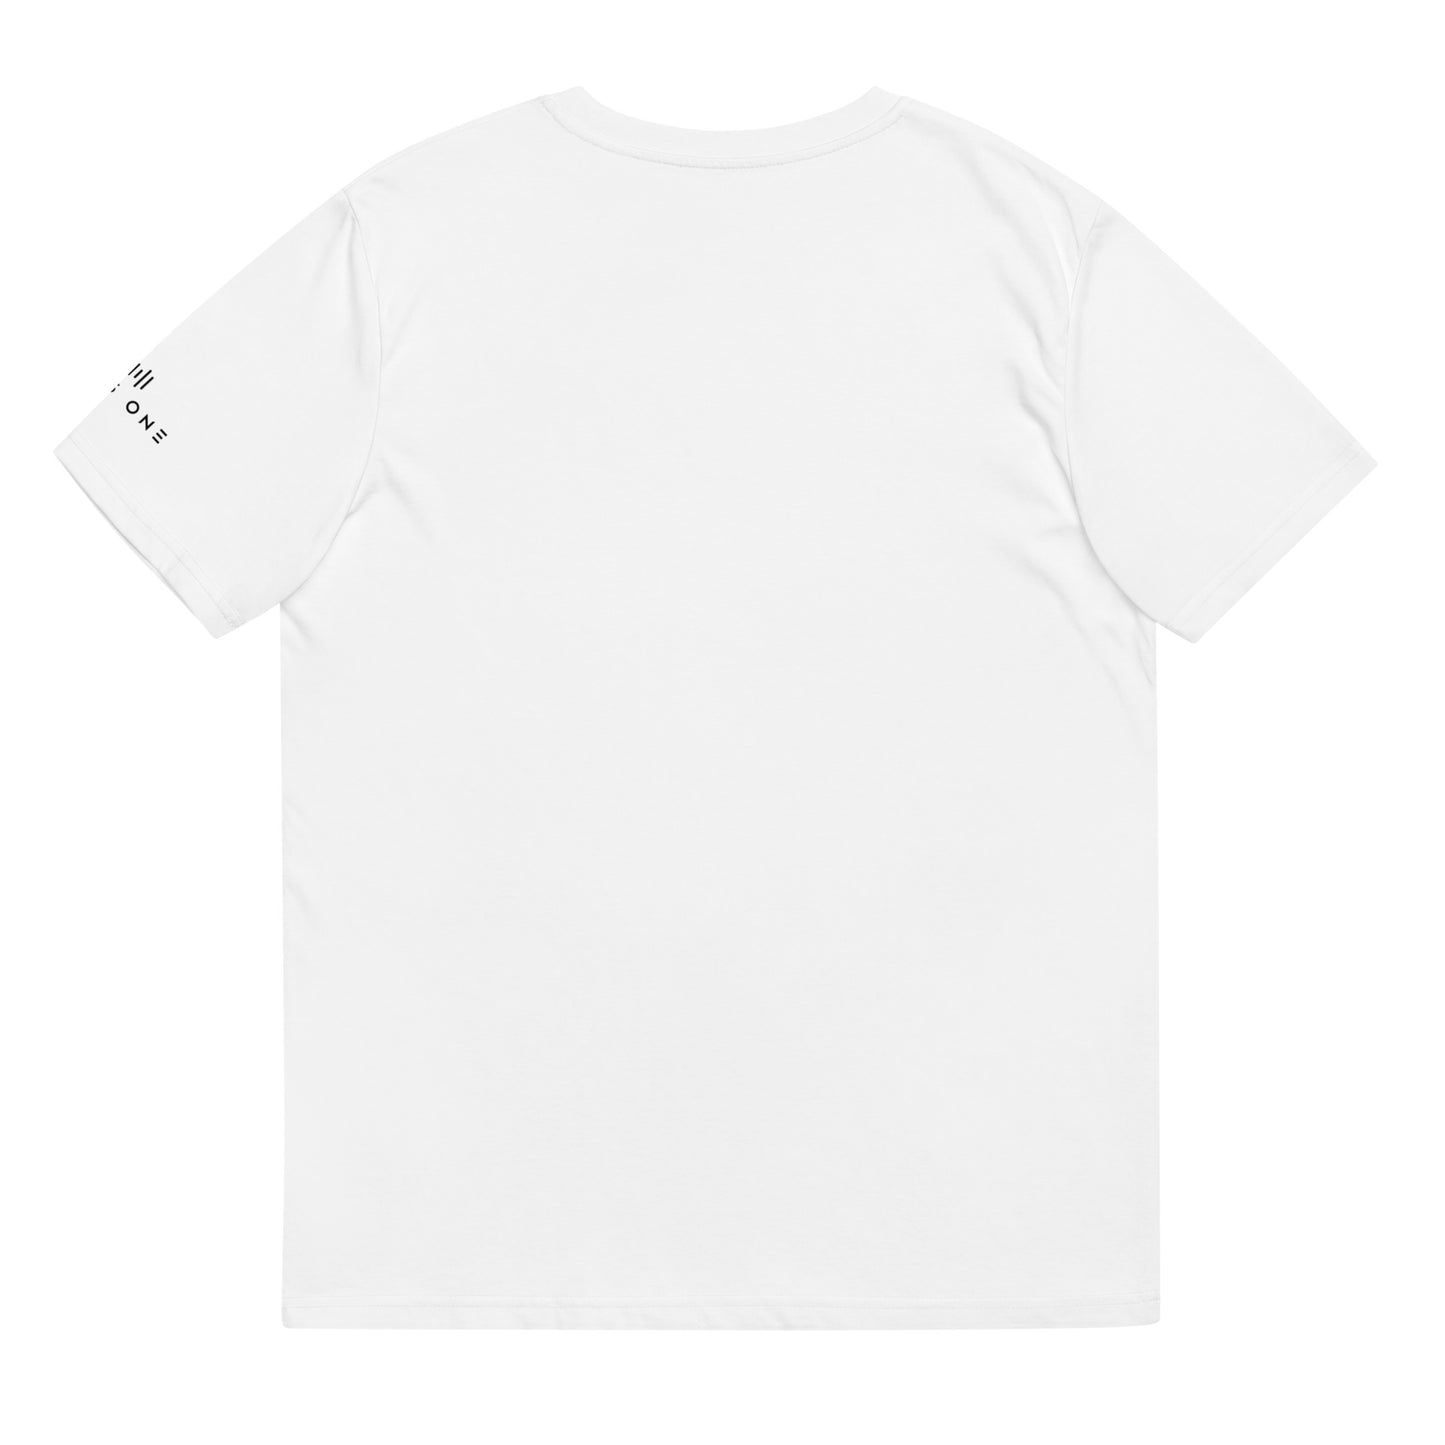 D&B (Atmosphere) Unisex organic cotton t-shirt (Black Text)